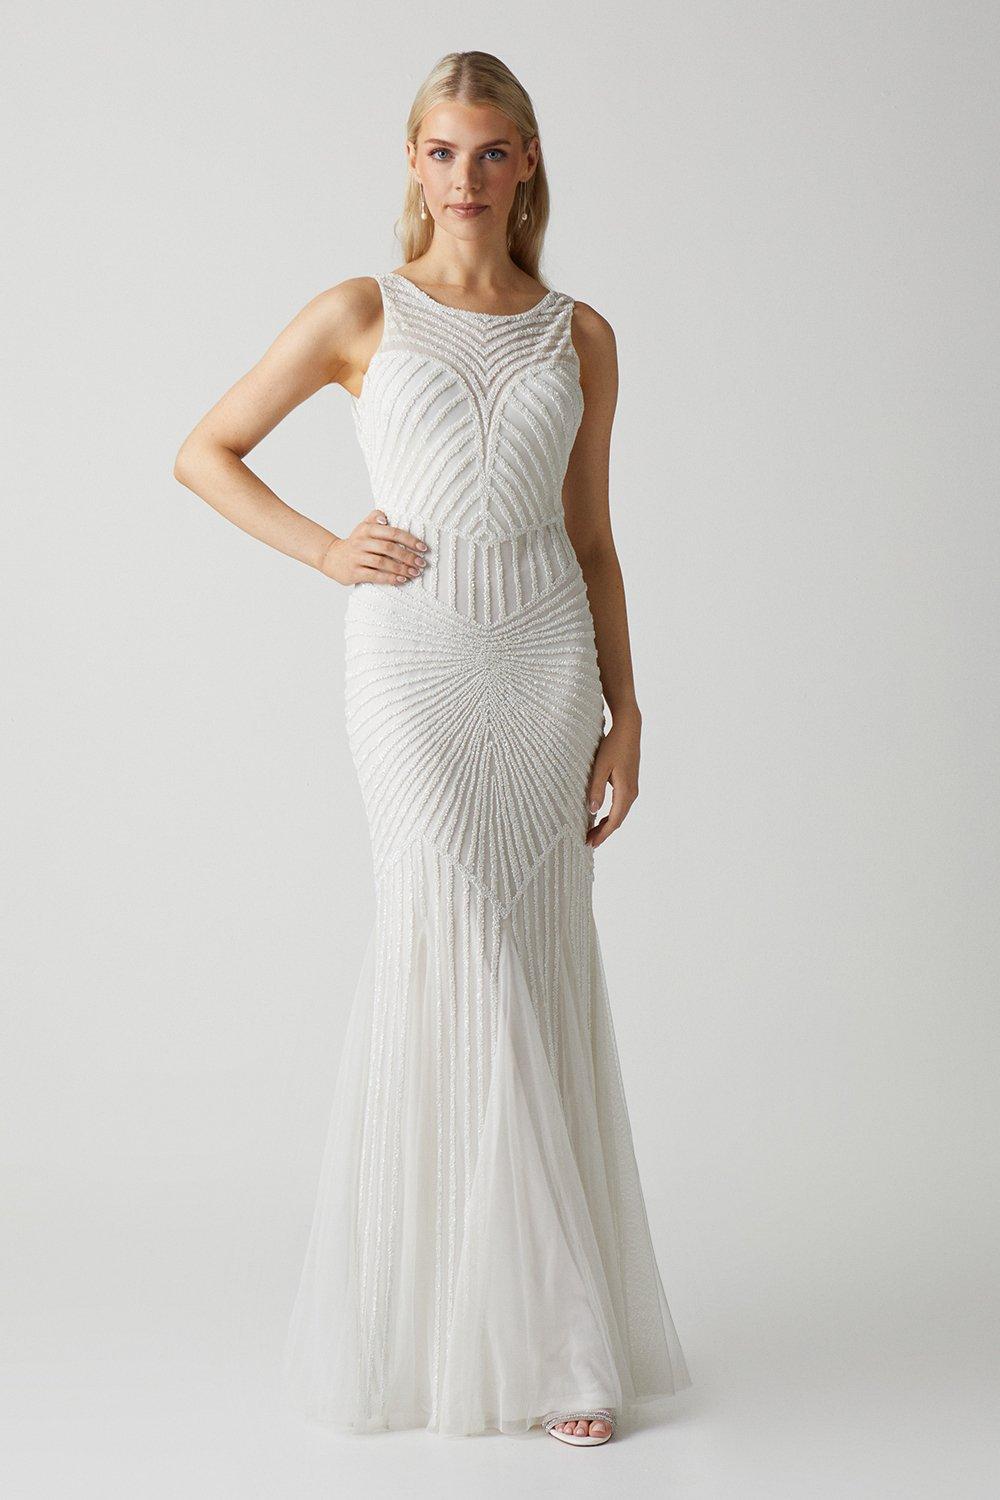 Premium Linear Embellished Wedding Dress - Ivory